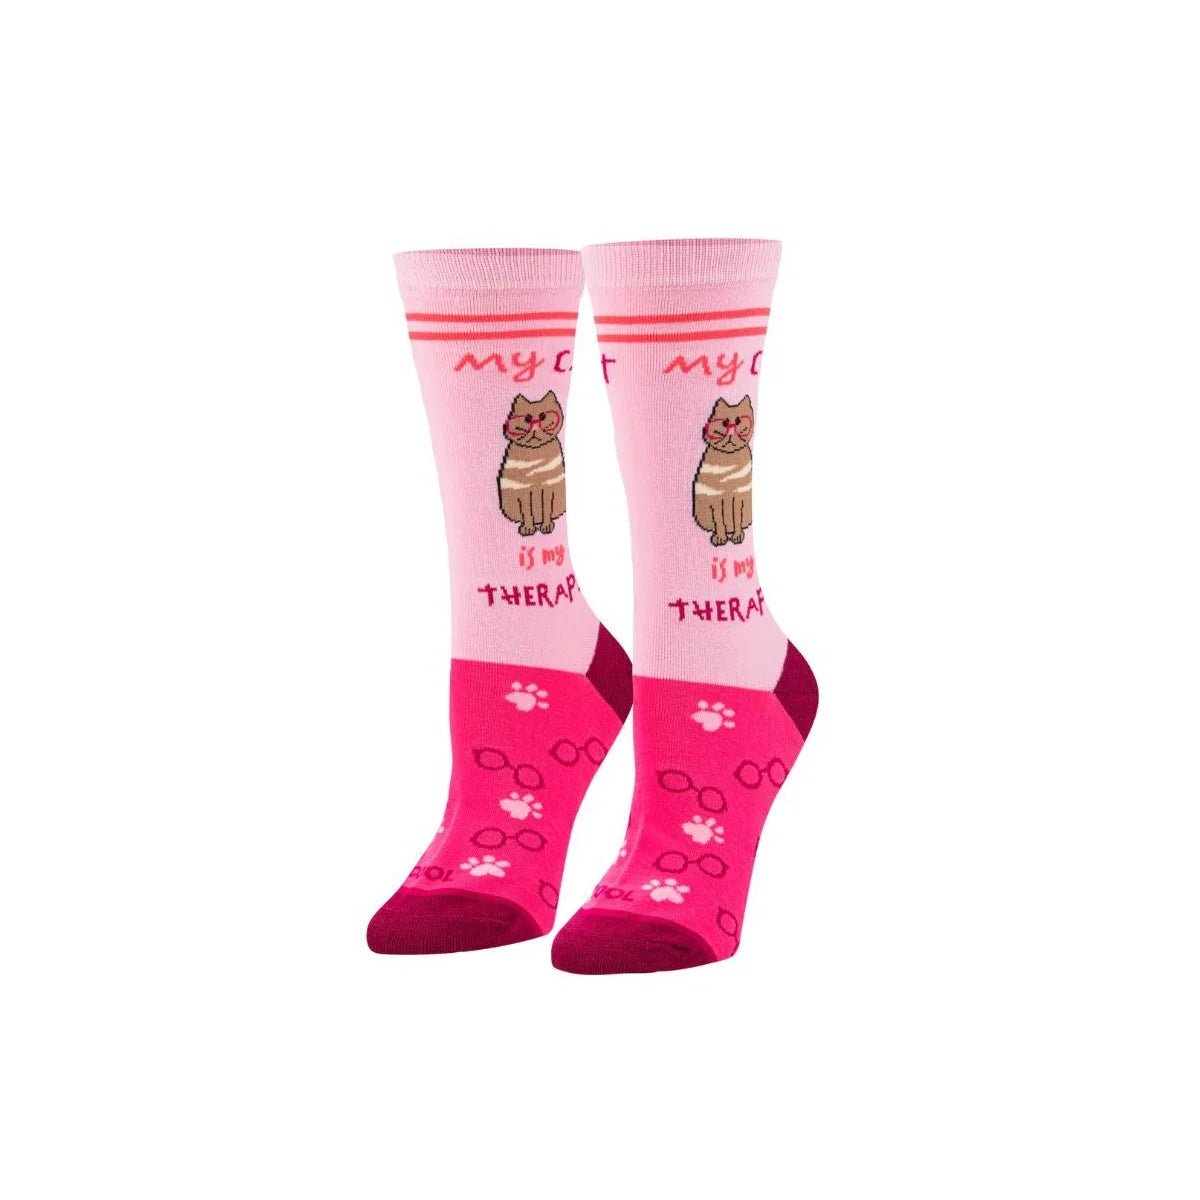 Cat Therapist Women's Socks